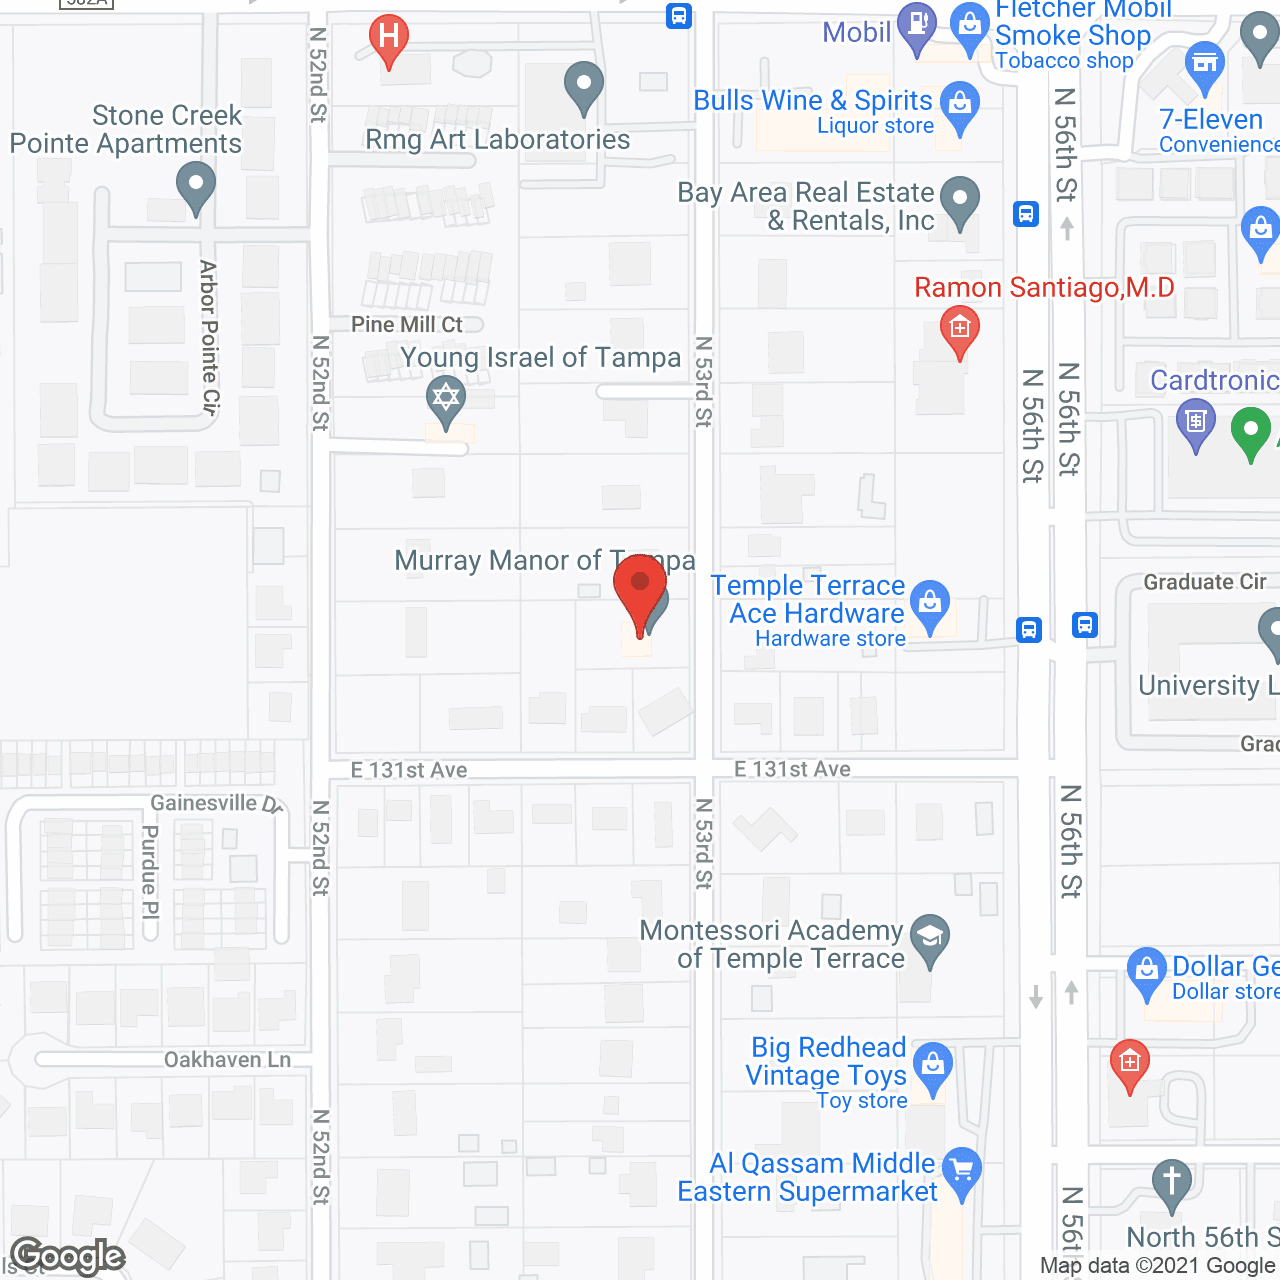 Murray Manor of Tampa in google map